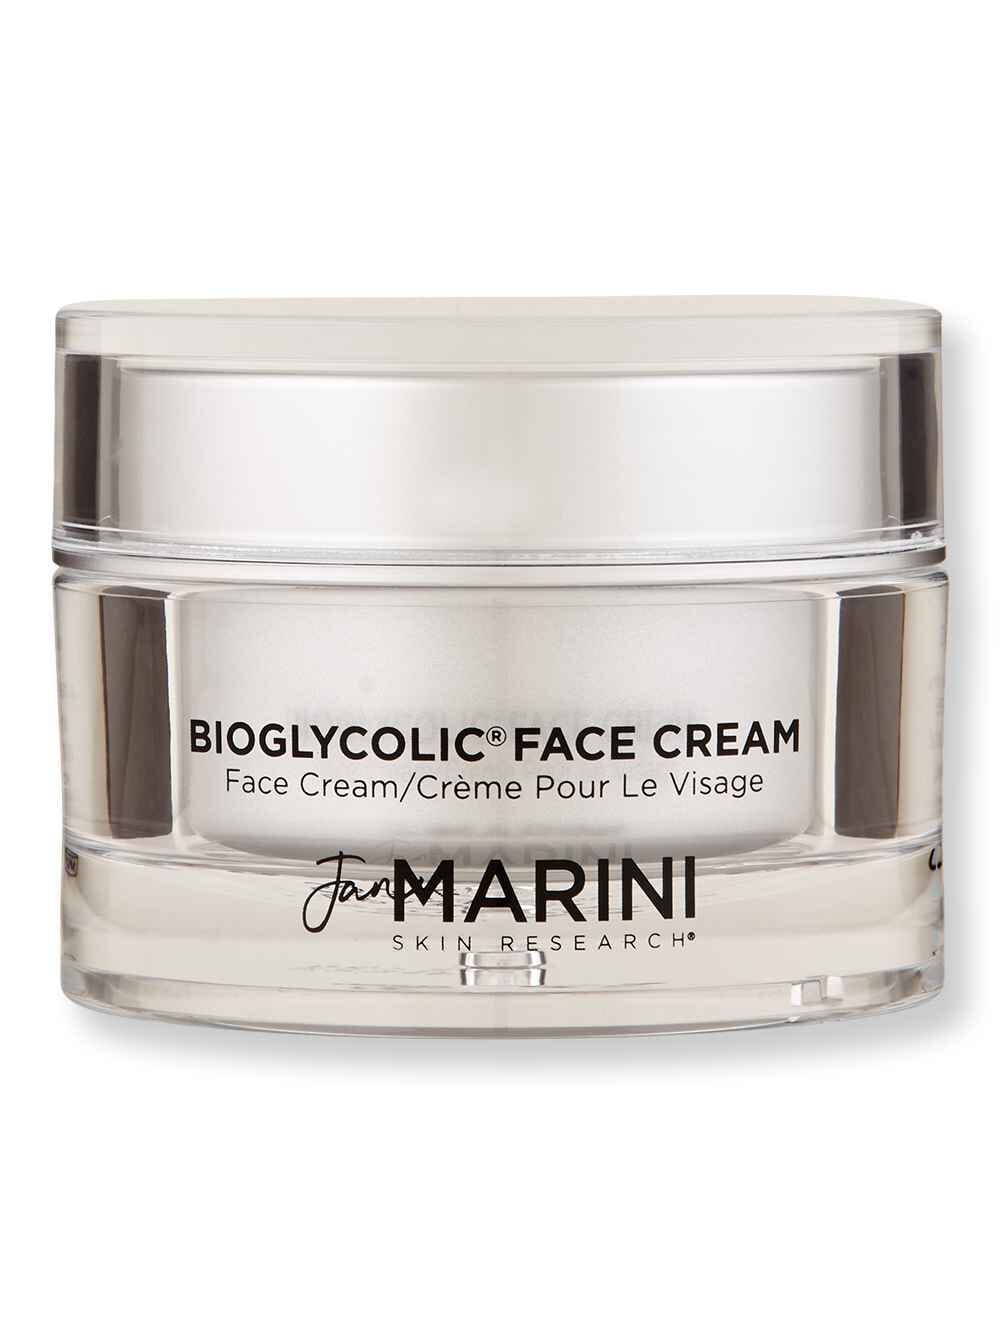 Jan Marini Jan Marini Bioglycolic Face Cream 2 oz60 ml Face Moisturizers 